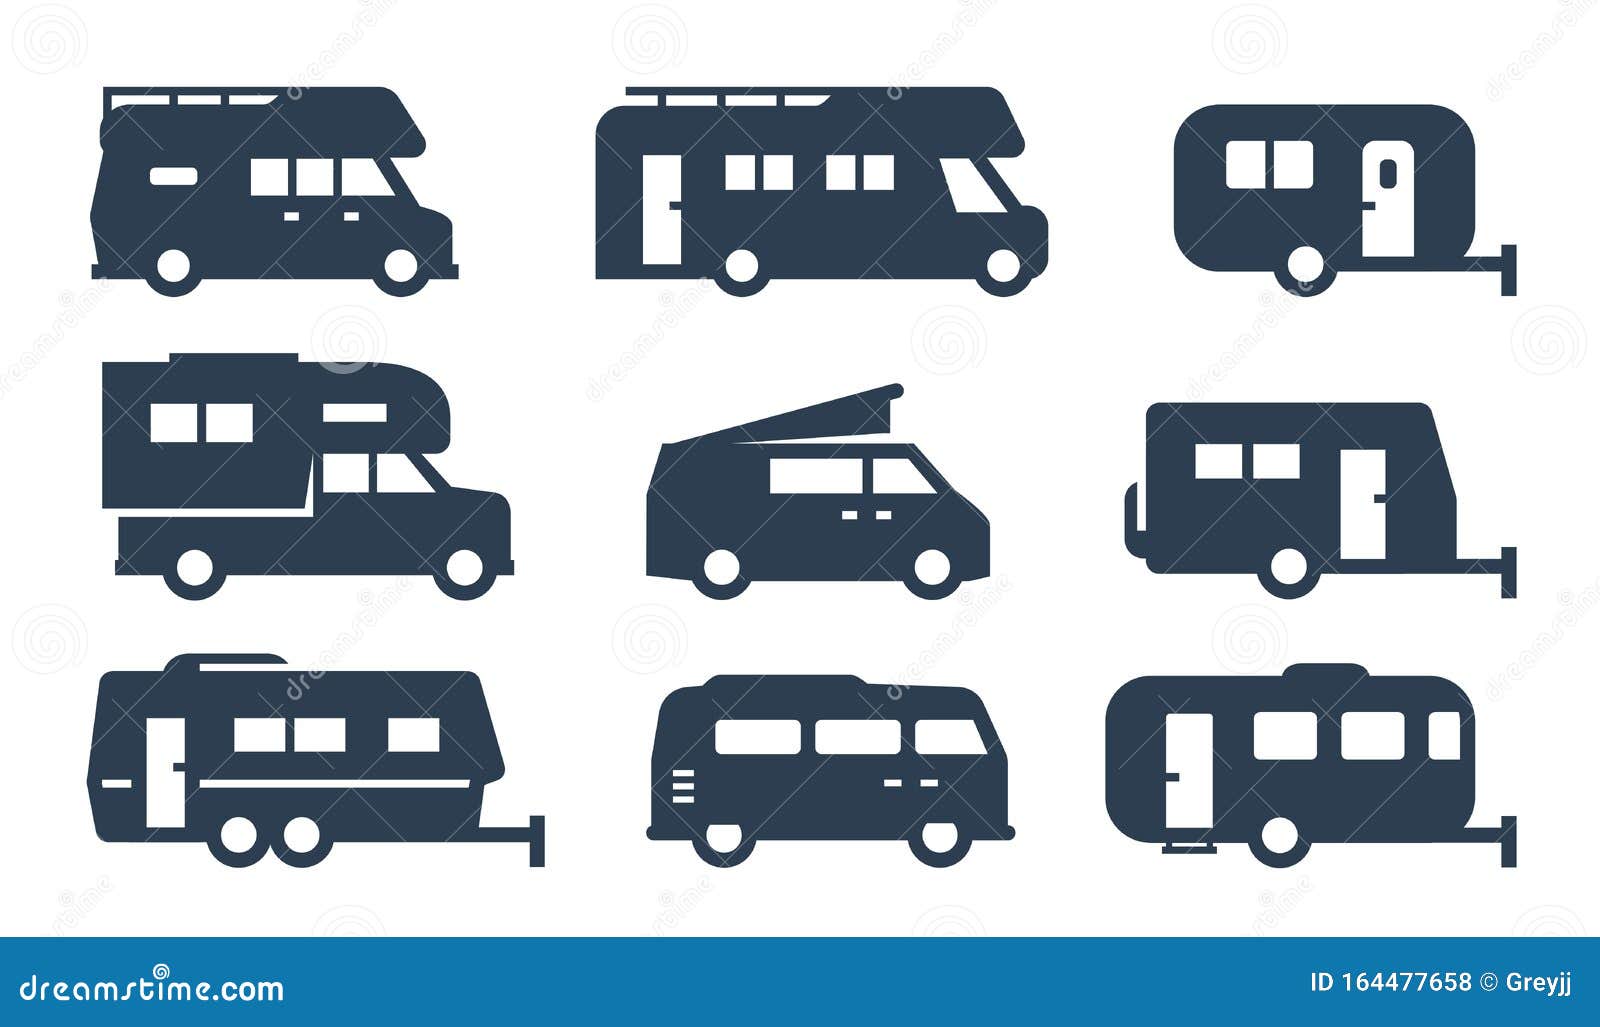 rv cars, recreational vehicles, camper vans icon set